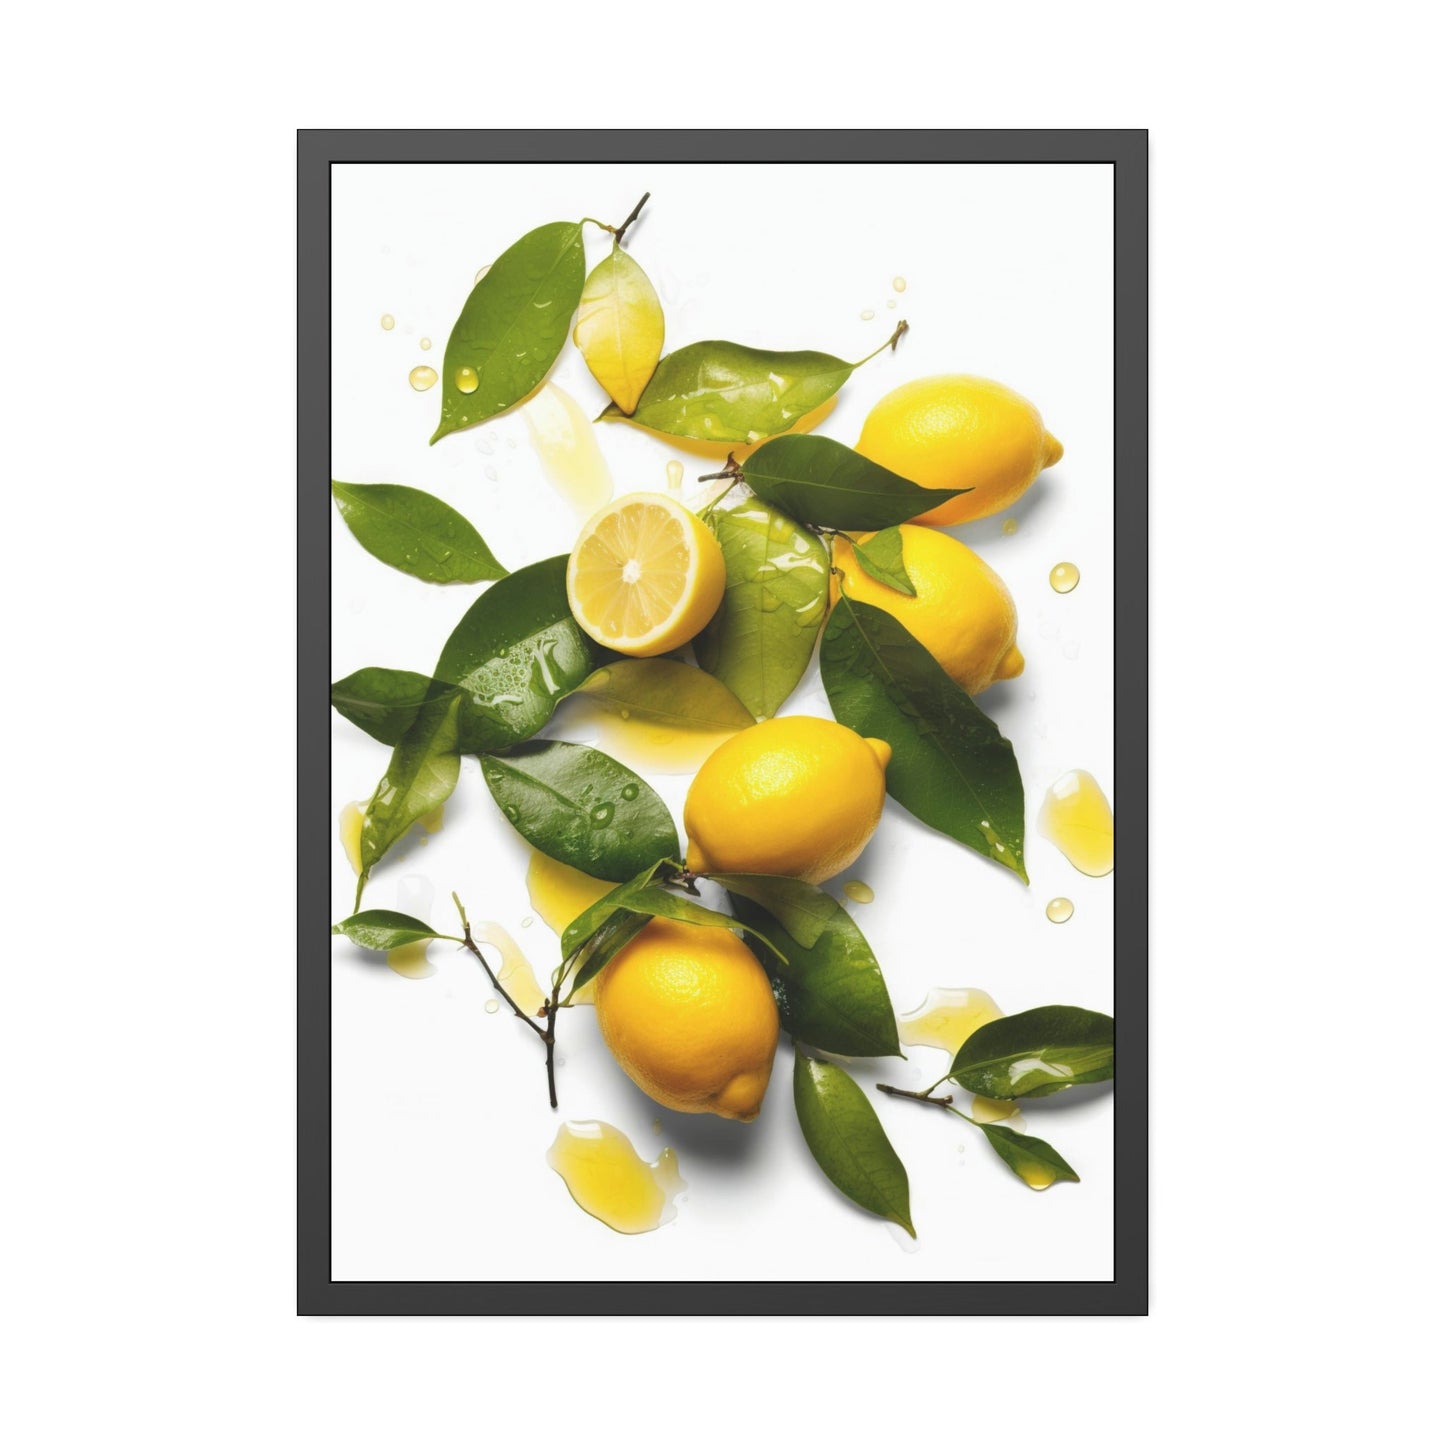 Beautiful Canvas Art Prints of Yellow Lemons on Framed Canvas